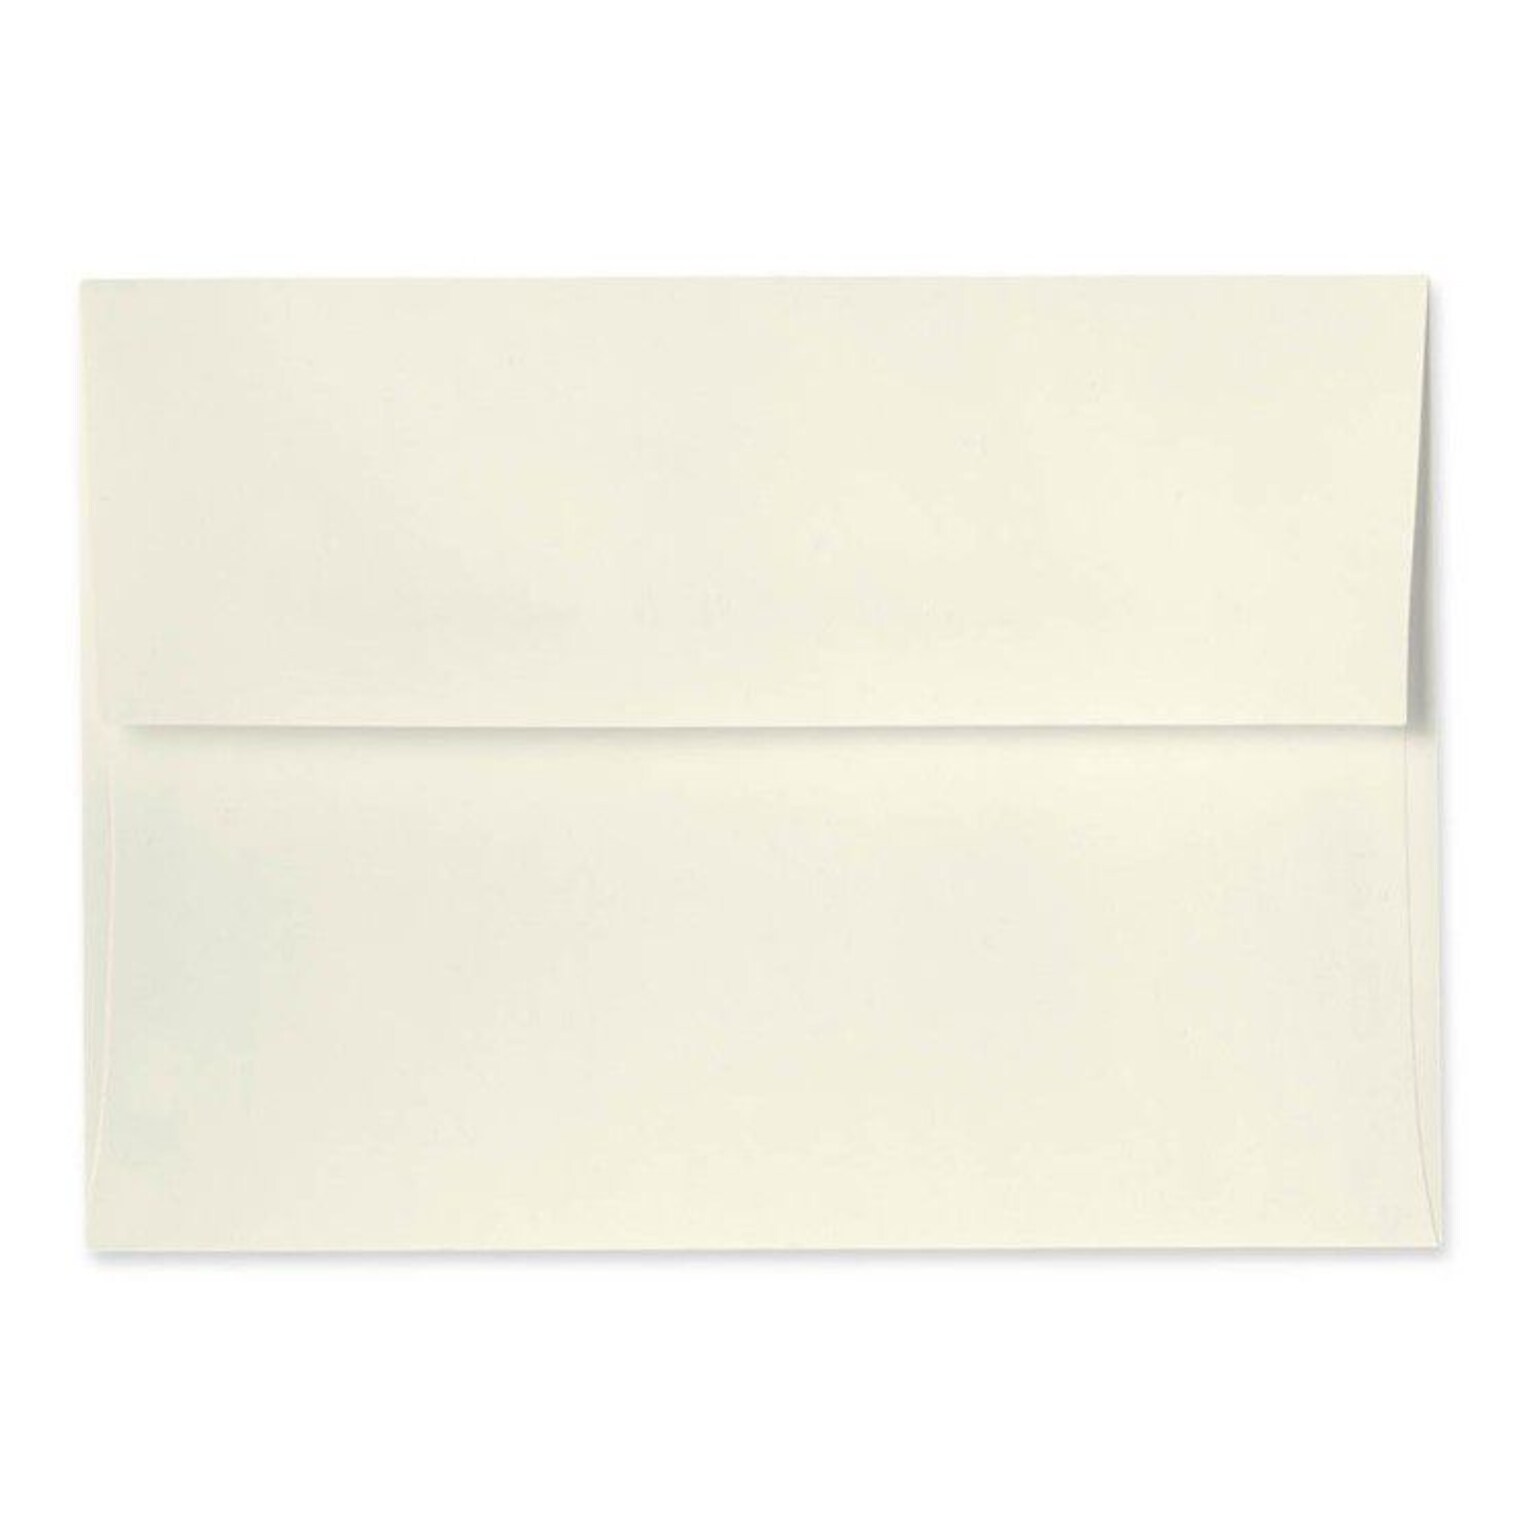 LUX A7 Invitation Envelopes (5 1/4 x 7 1/4) 250/Box, Natural - 100% Recycled (4880-NPC-250)